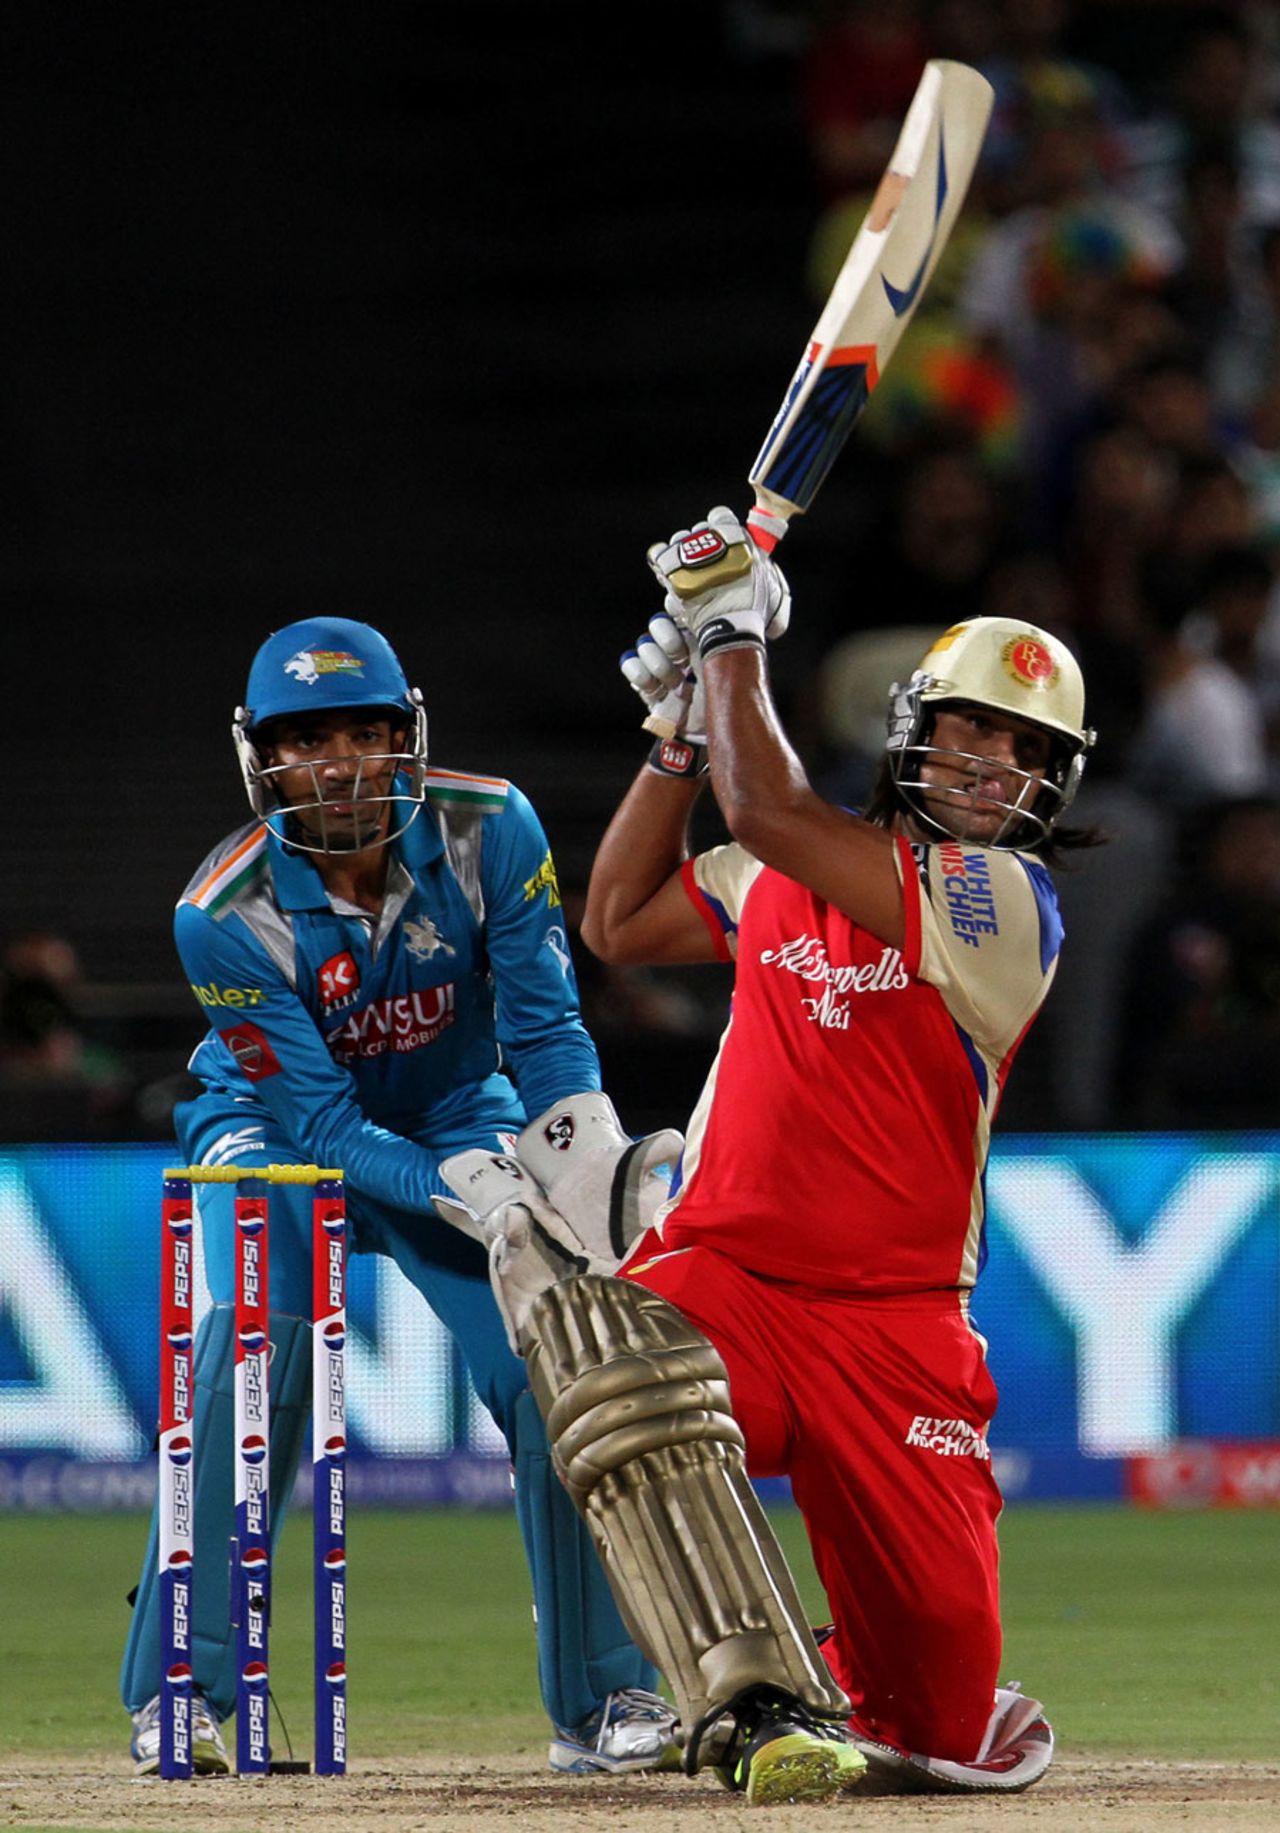 Saurabh Tiwary powers a shot past the bowler, Pune Warriors v Royal Challengers Bangalore, IPL 2013, Pune, May 2, 2013